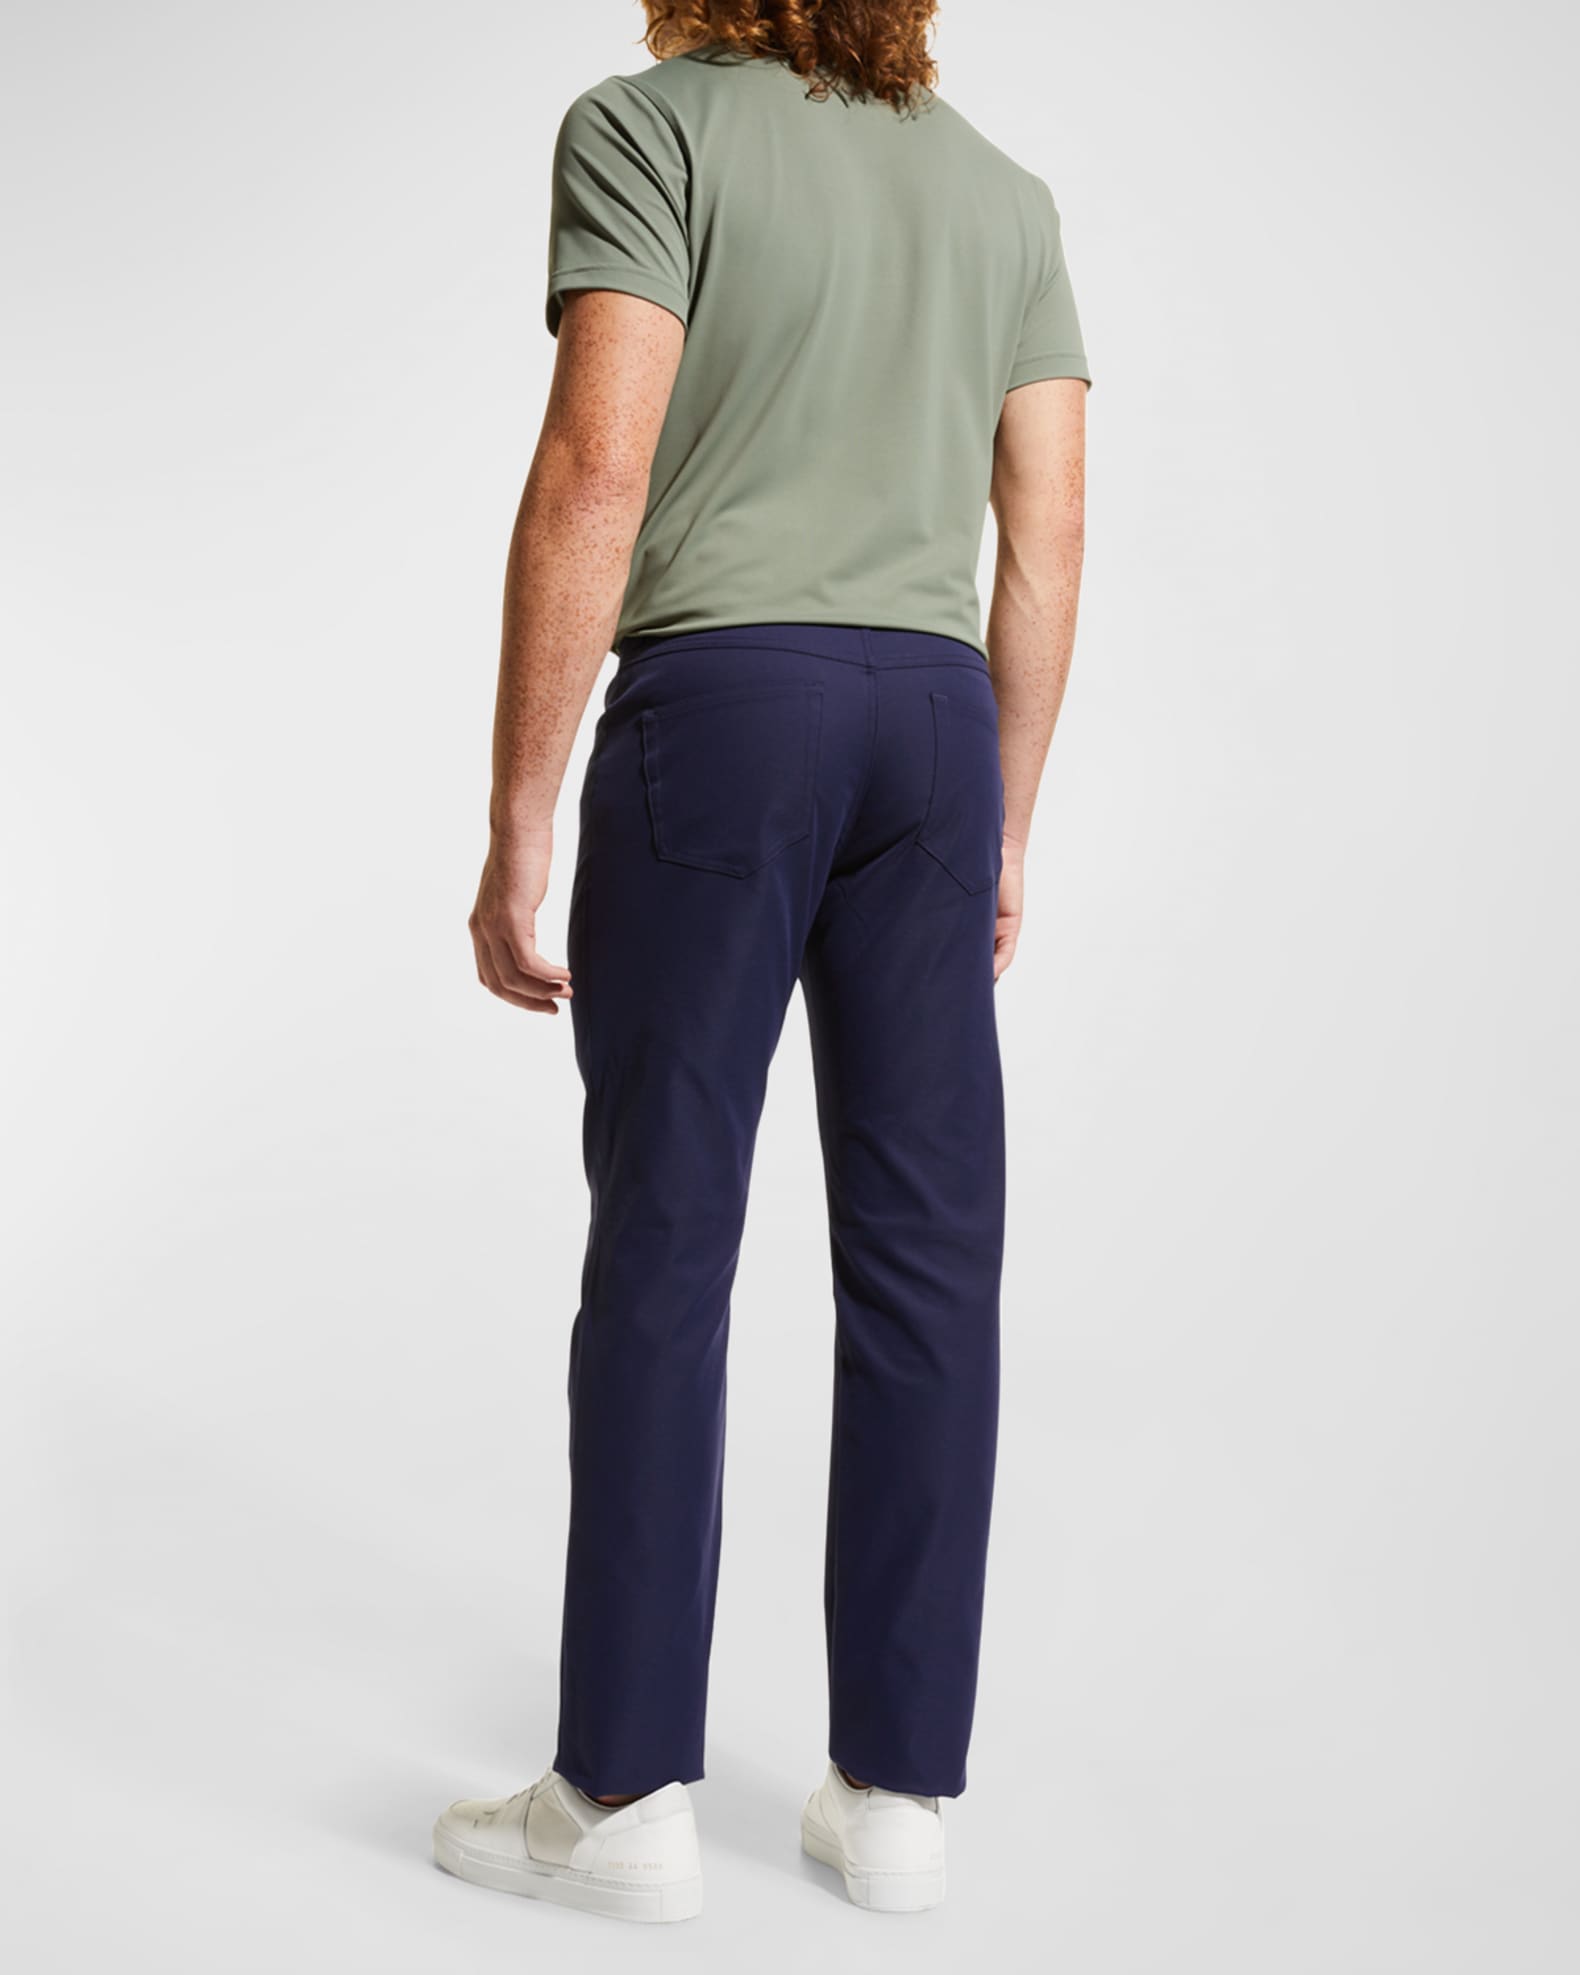 Peter Millar Men's eb66 Performance Pants | Neiman Marcus